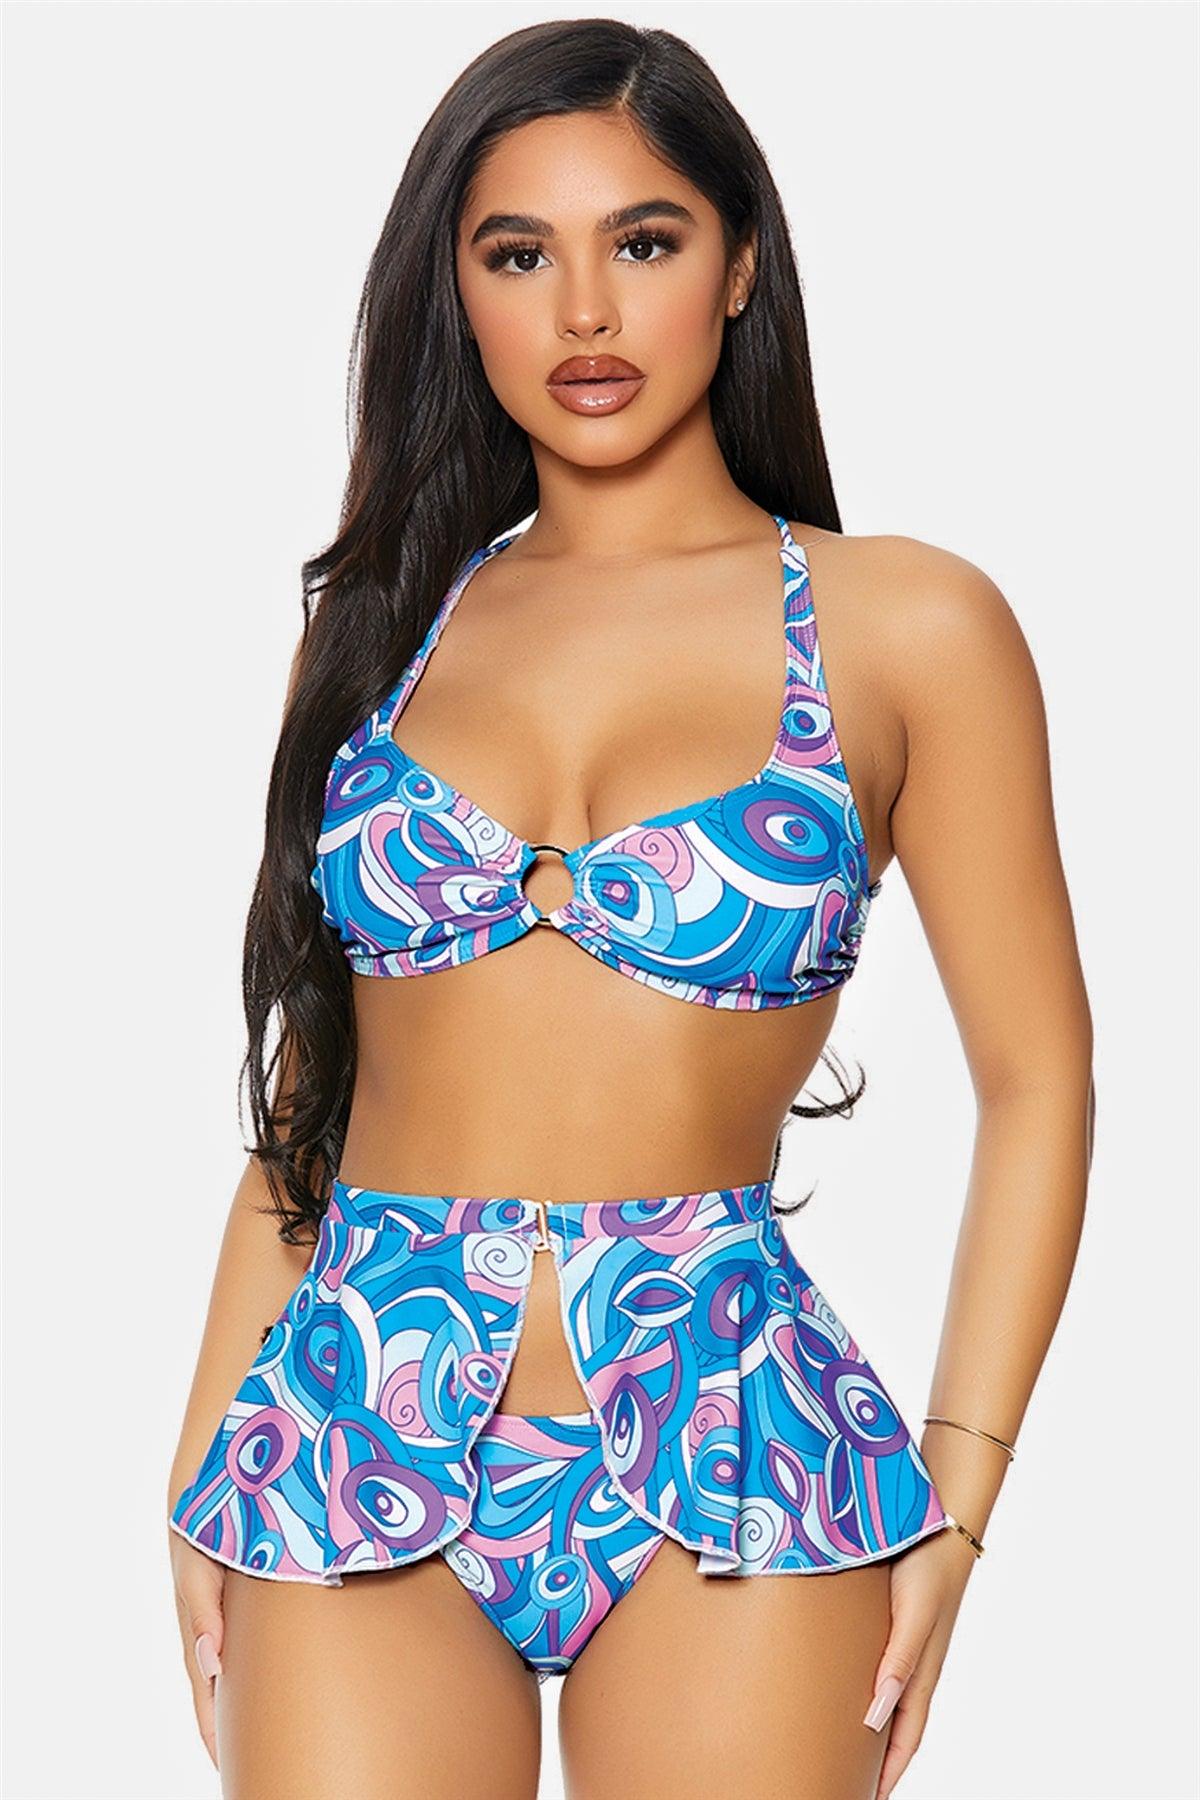 Blueberry Martinique Gold Ring Strappy Back Peplum Skirt Bikini Swimwear 3 Piece Set